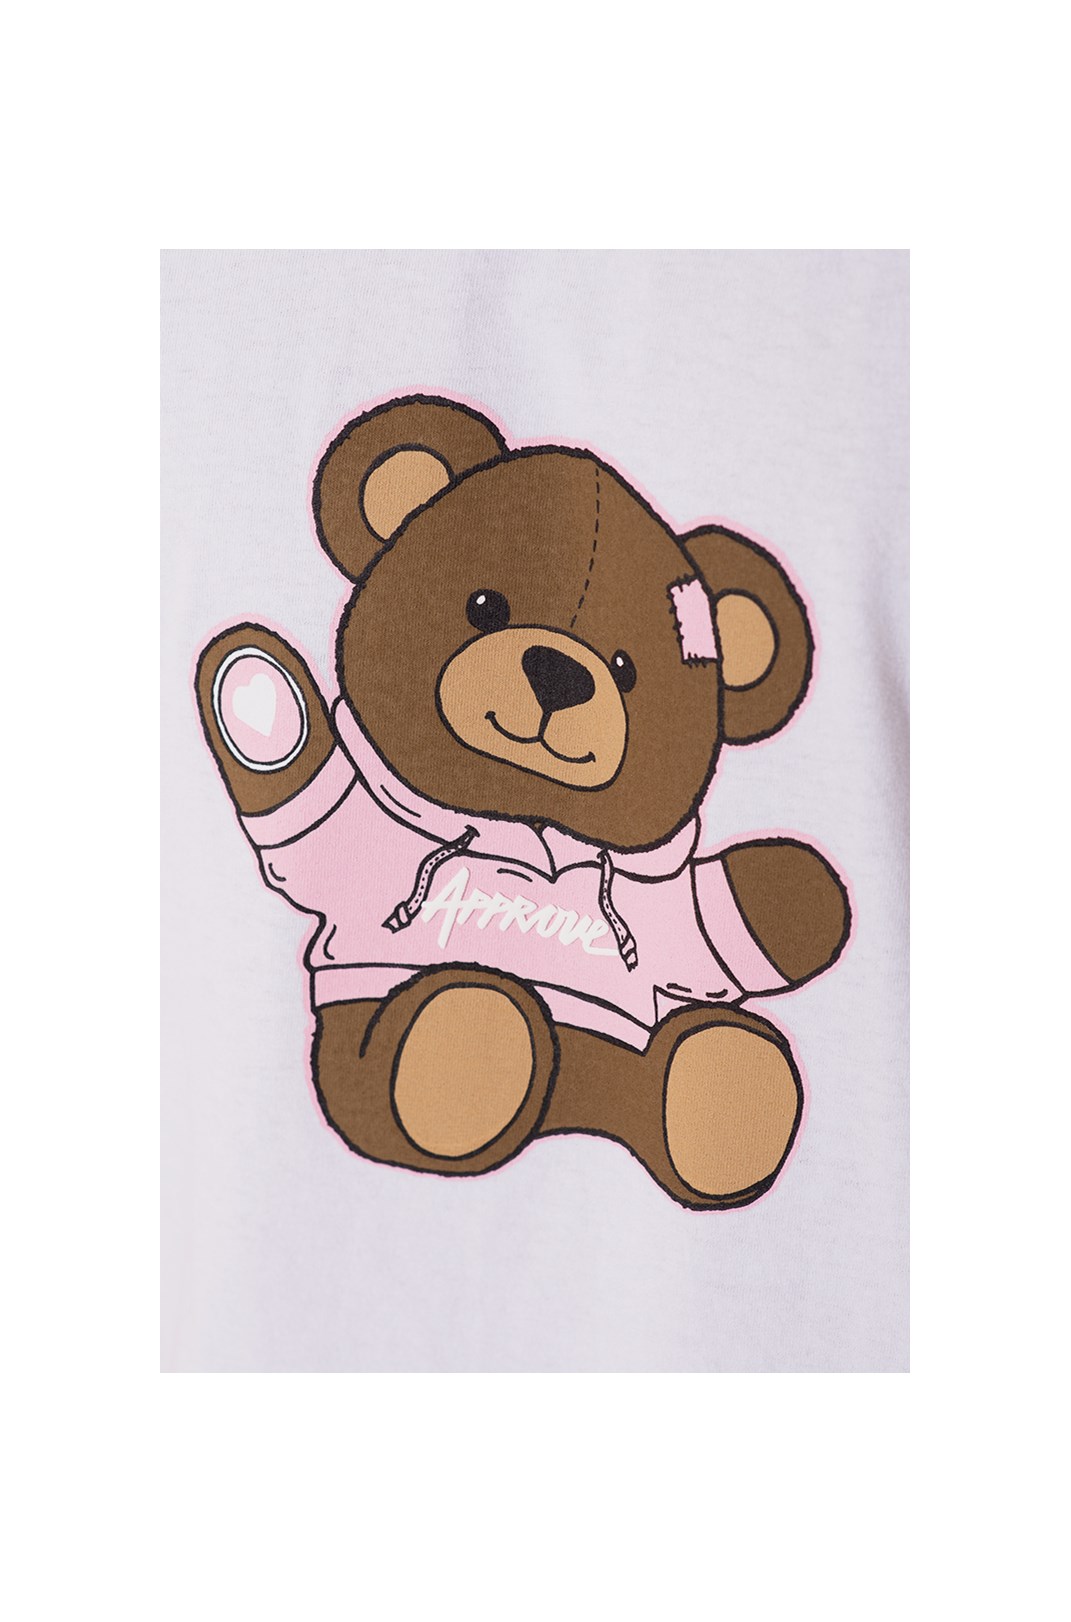 Camiseta Regular Approve Bear Branca